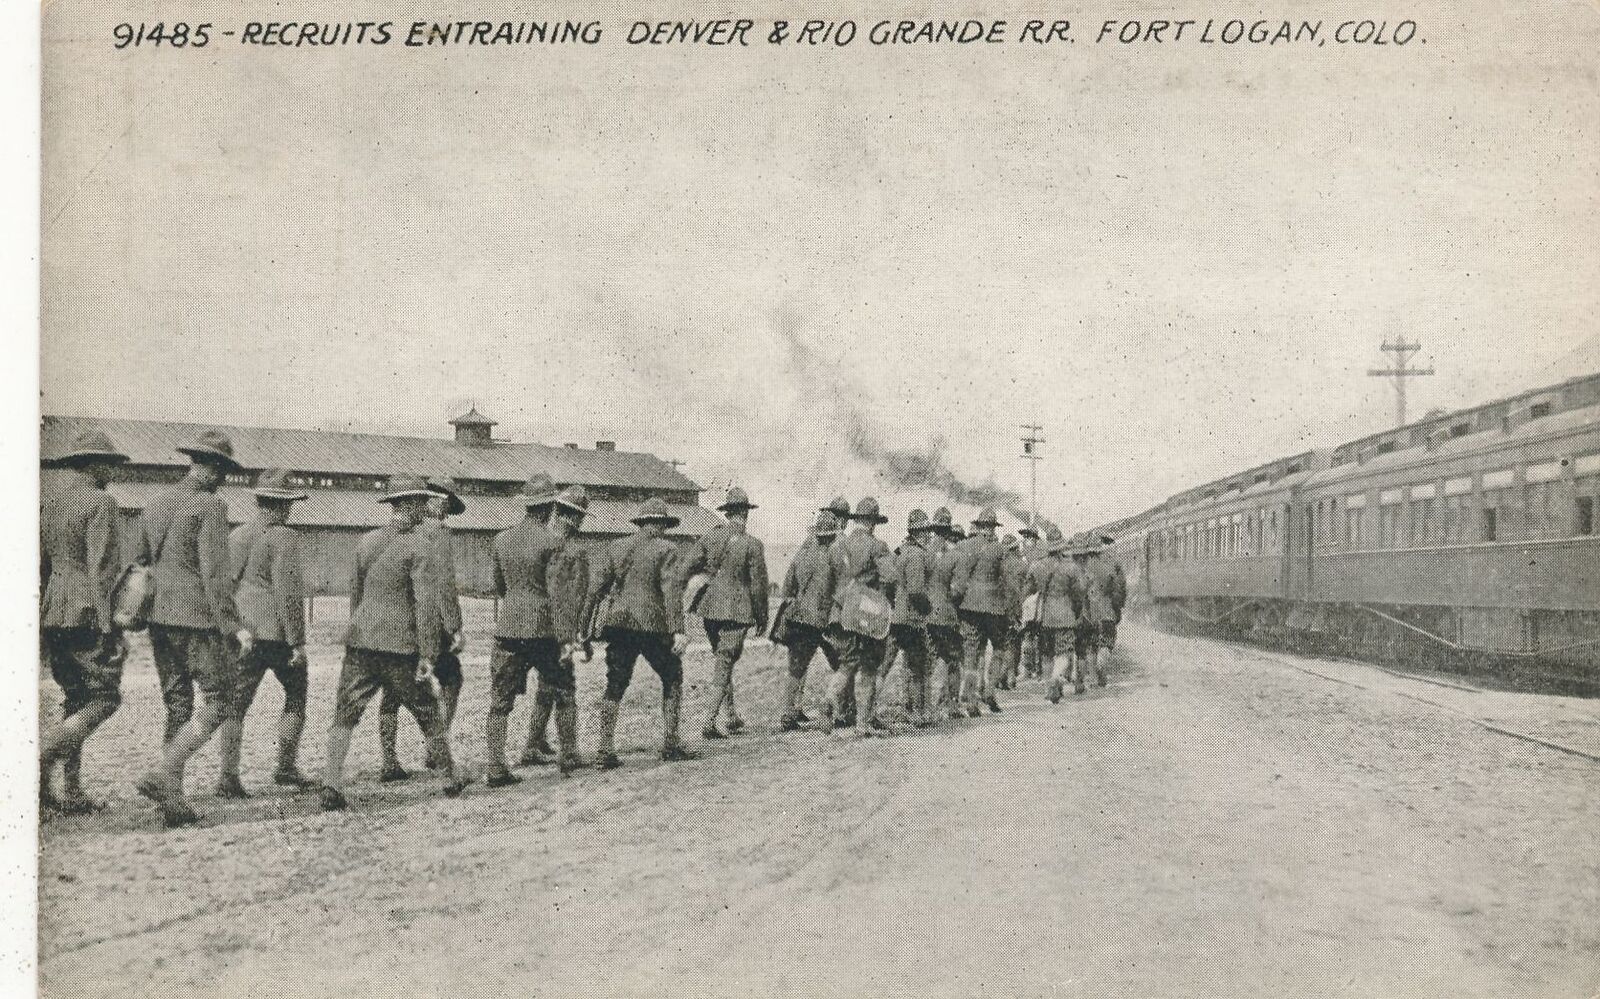 ENGLEWOOD CO - Fort Logan Recruits Entraining Denver & Rio Grande Railroad